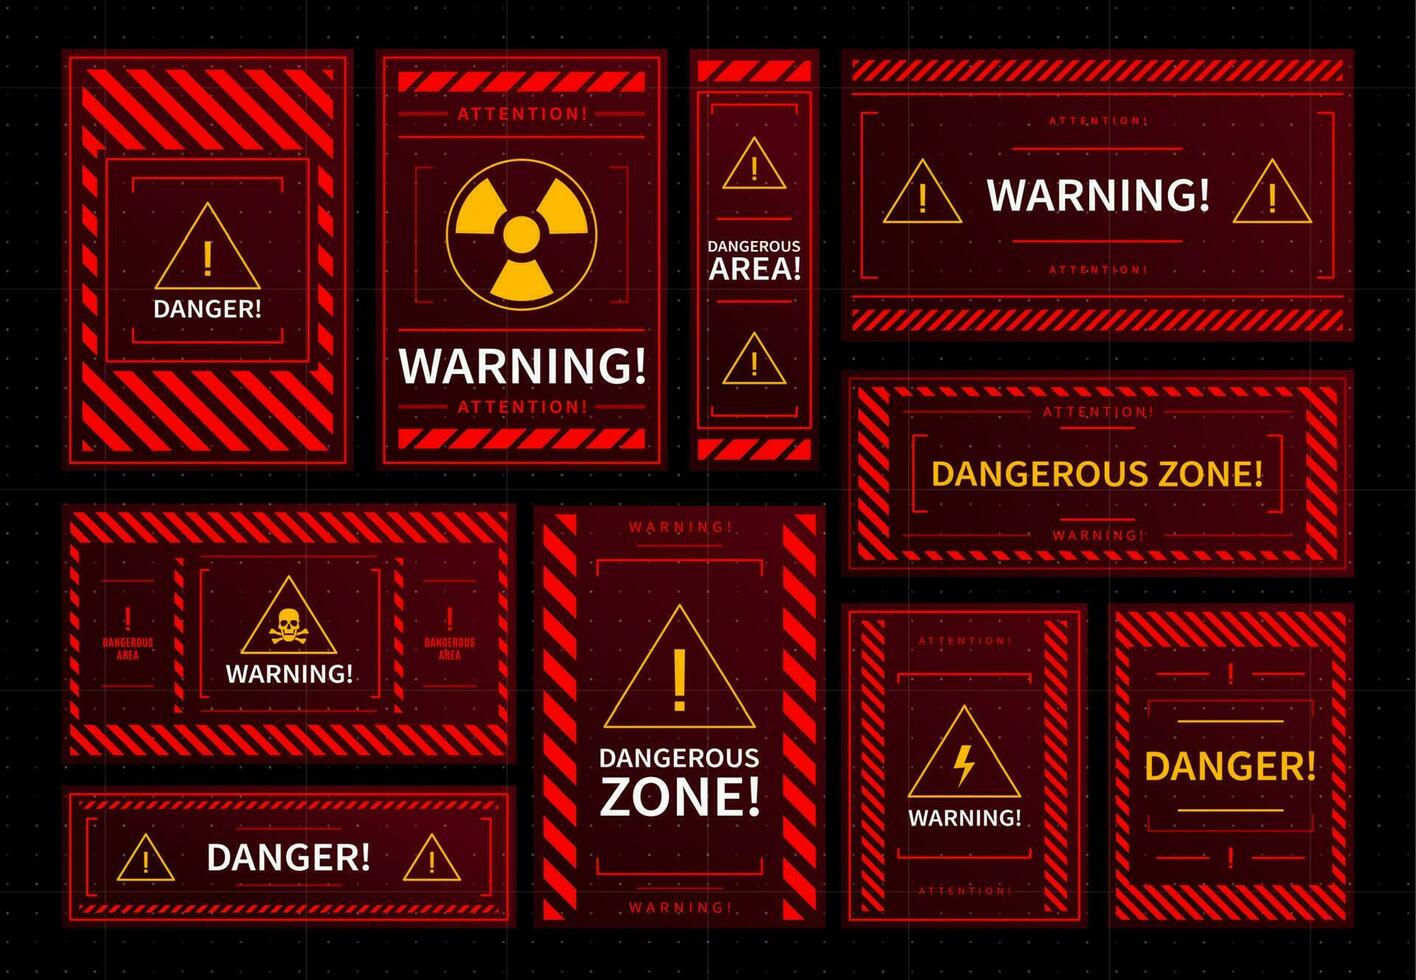 Danger zone warning frames, HUD interface alarms vector